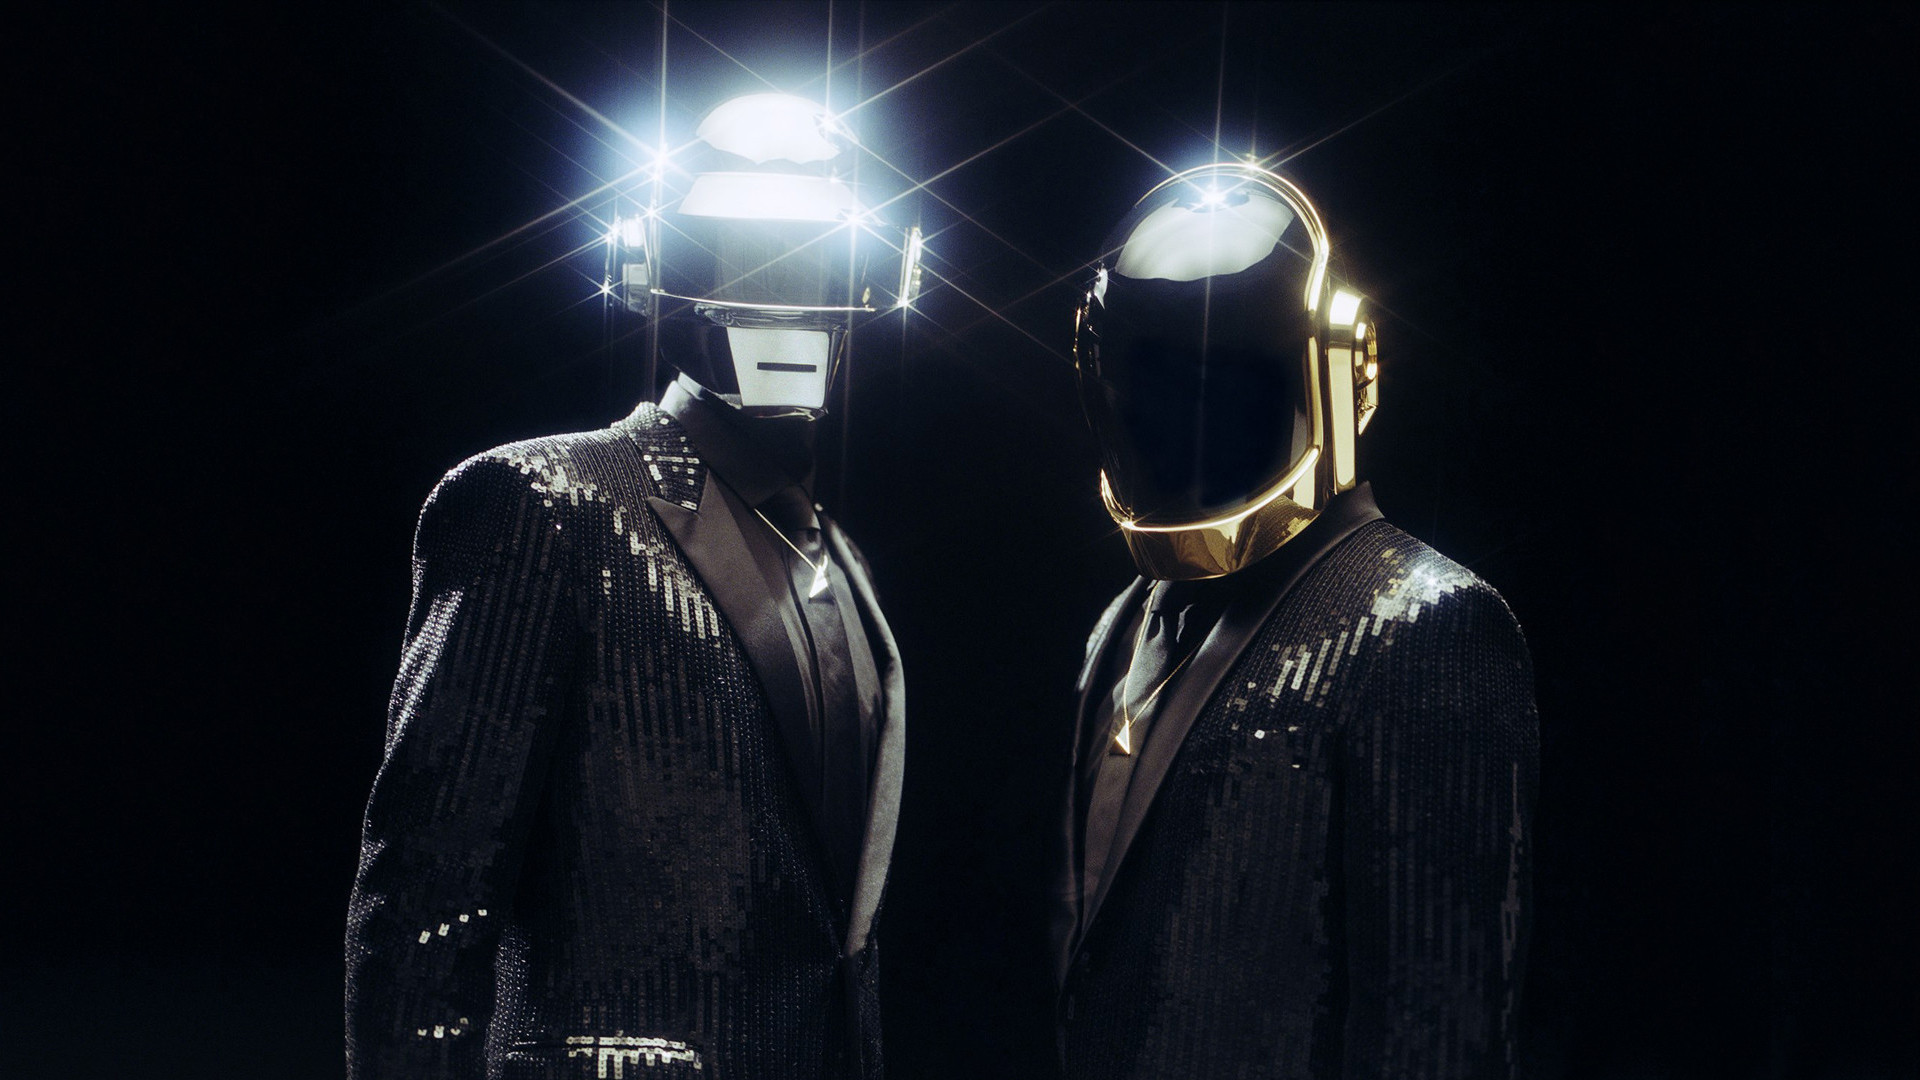 Conoce el origen de "Digital Love" de Daft Punk